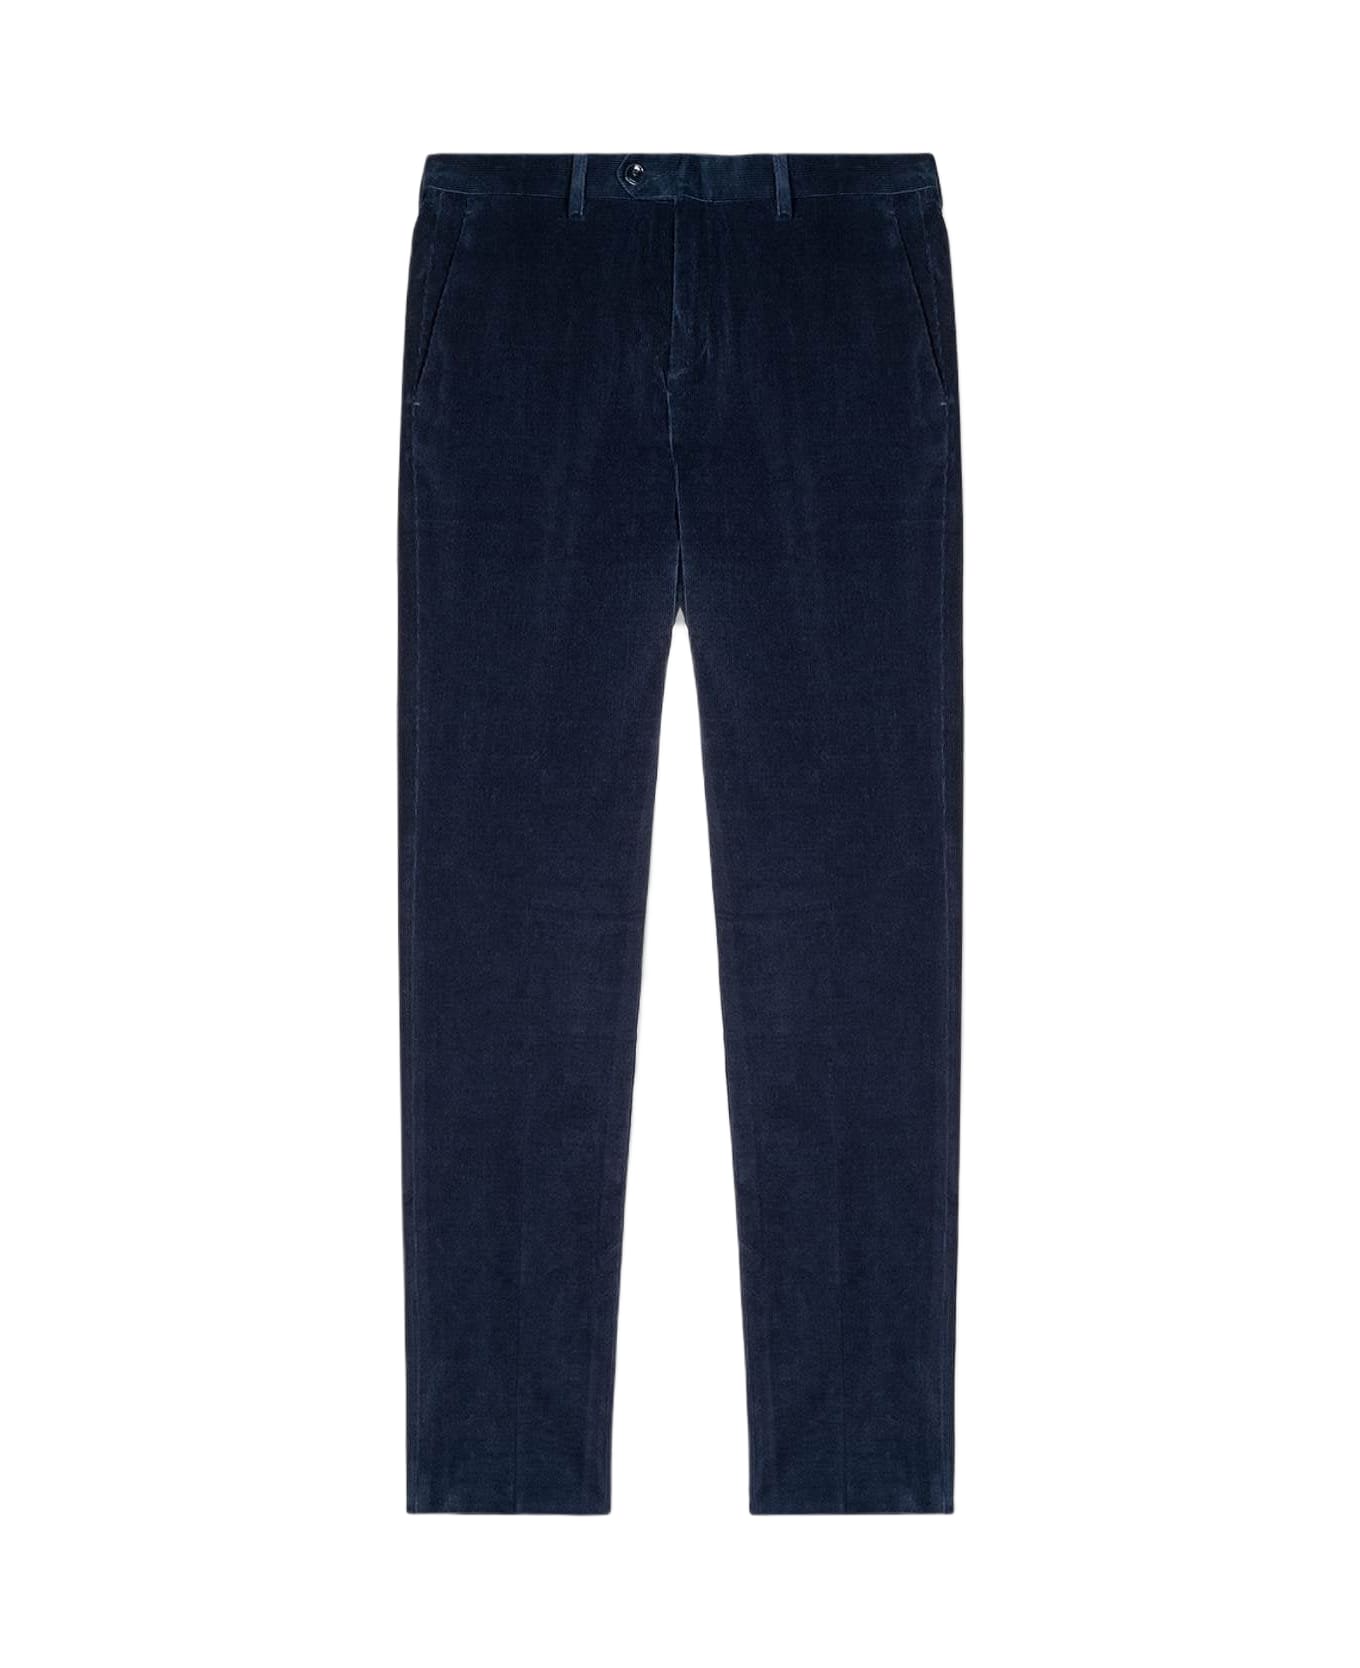 Larusmiani Trousers 'howard' Pants - Blue